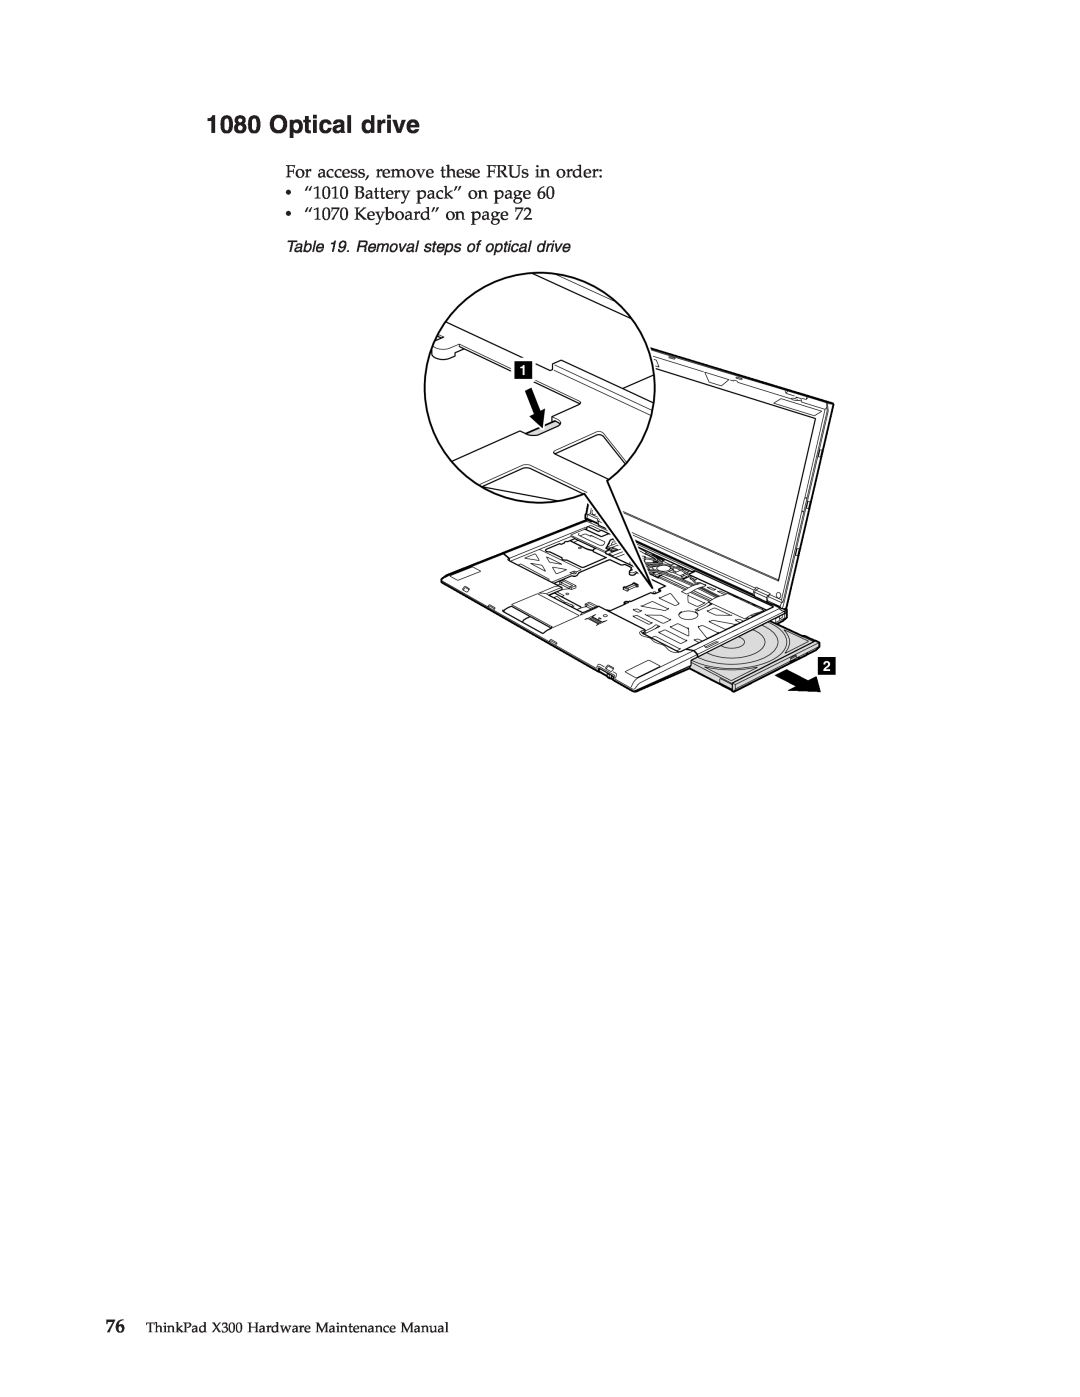 Lenovo manual Optical drive, Removal steps of optical drive, ThinkPad X300 Hardware Maintenance Manual 